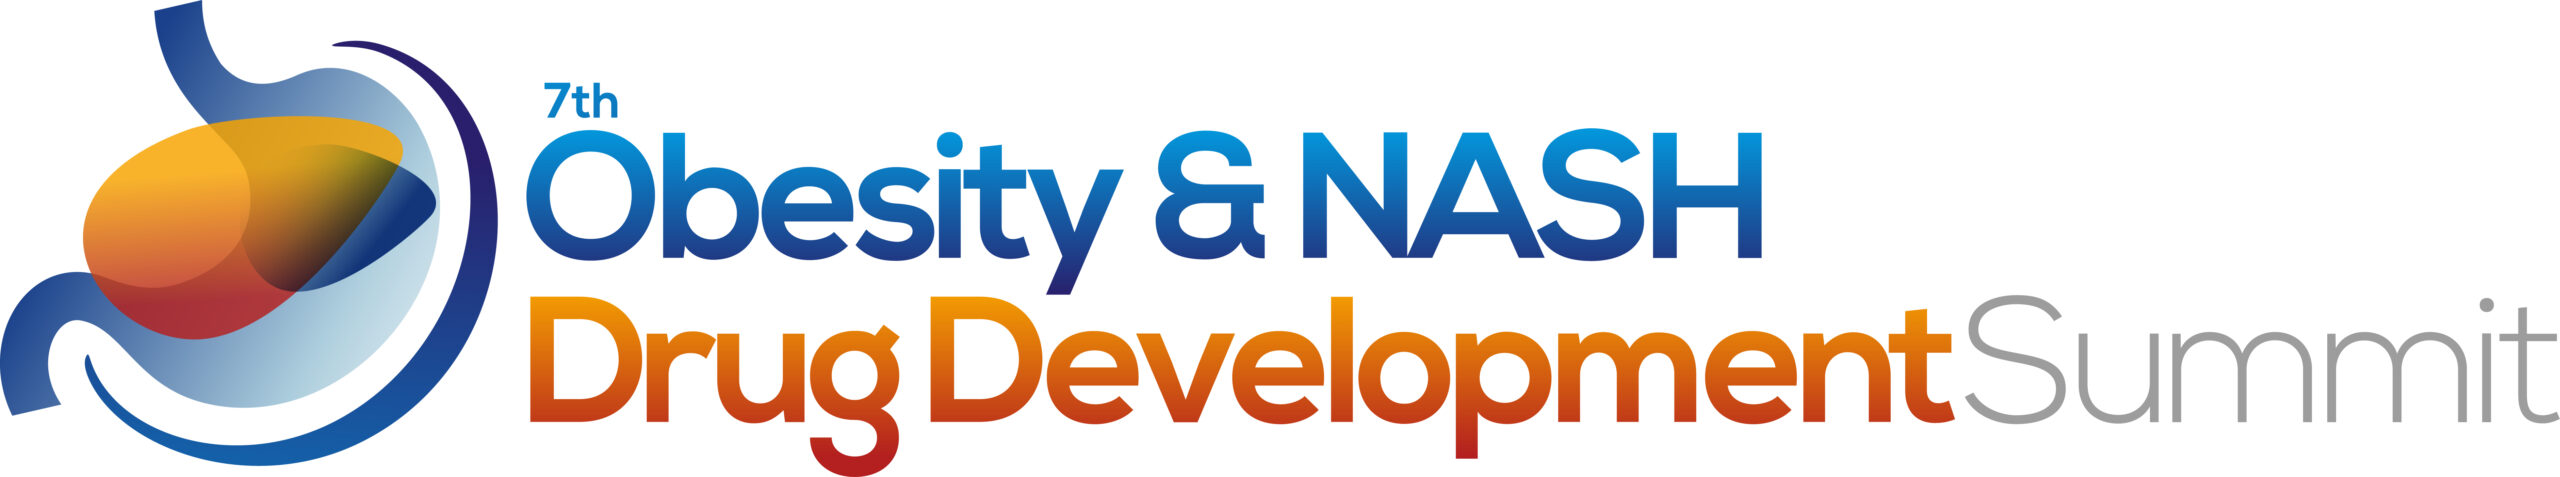 HW220619-25586-7th-Obesity-NASH-Drug-Development-Summit-NEW-COLOURS-FINAL-scaled